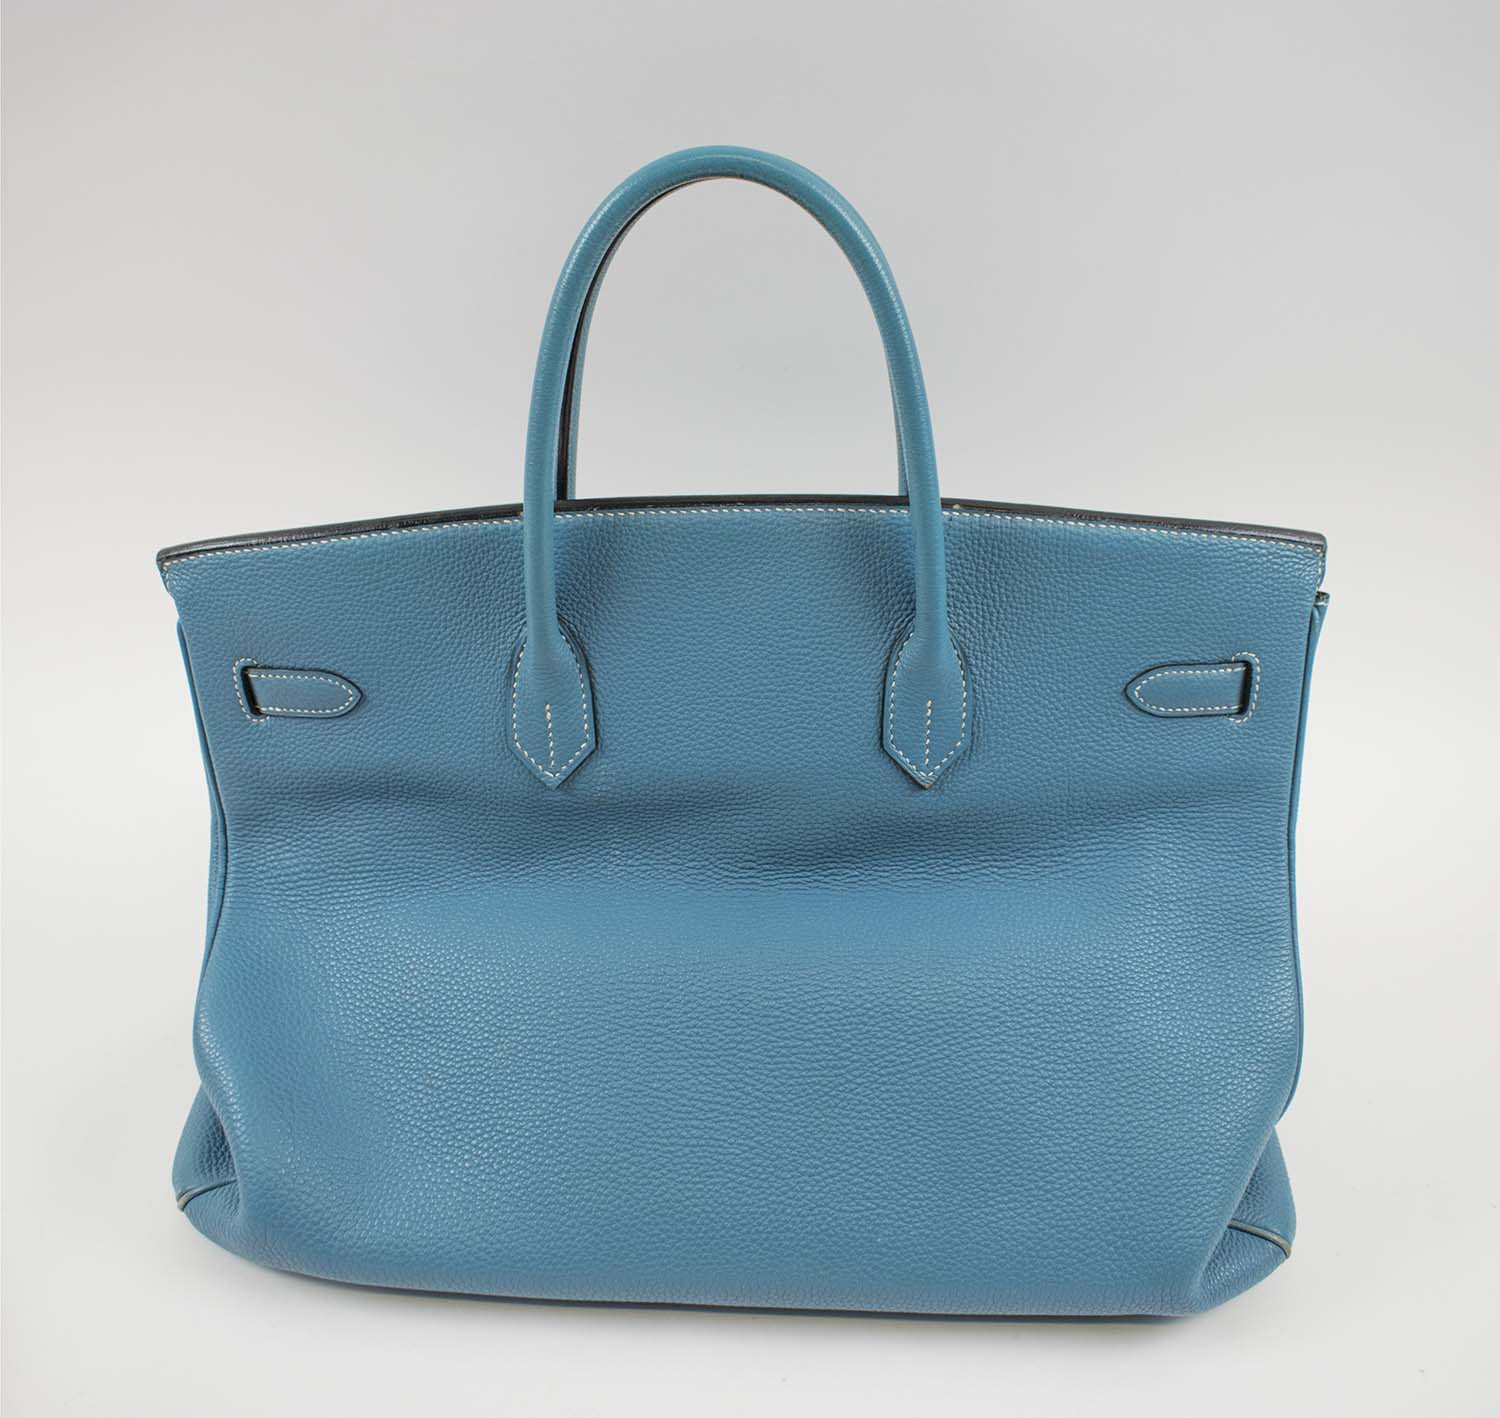 Sold at Auction: Hermes 40cm Blue Jean Leather Birkin Bag PHW